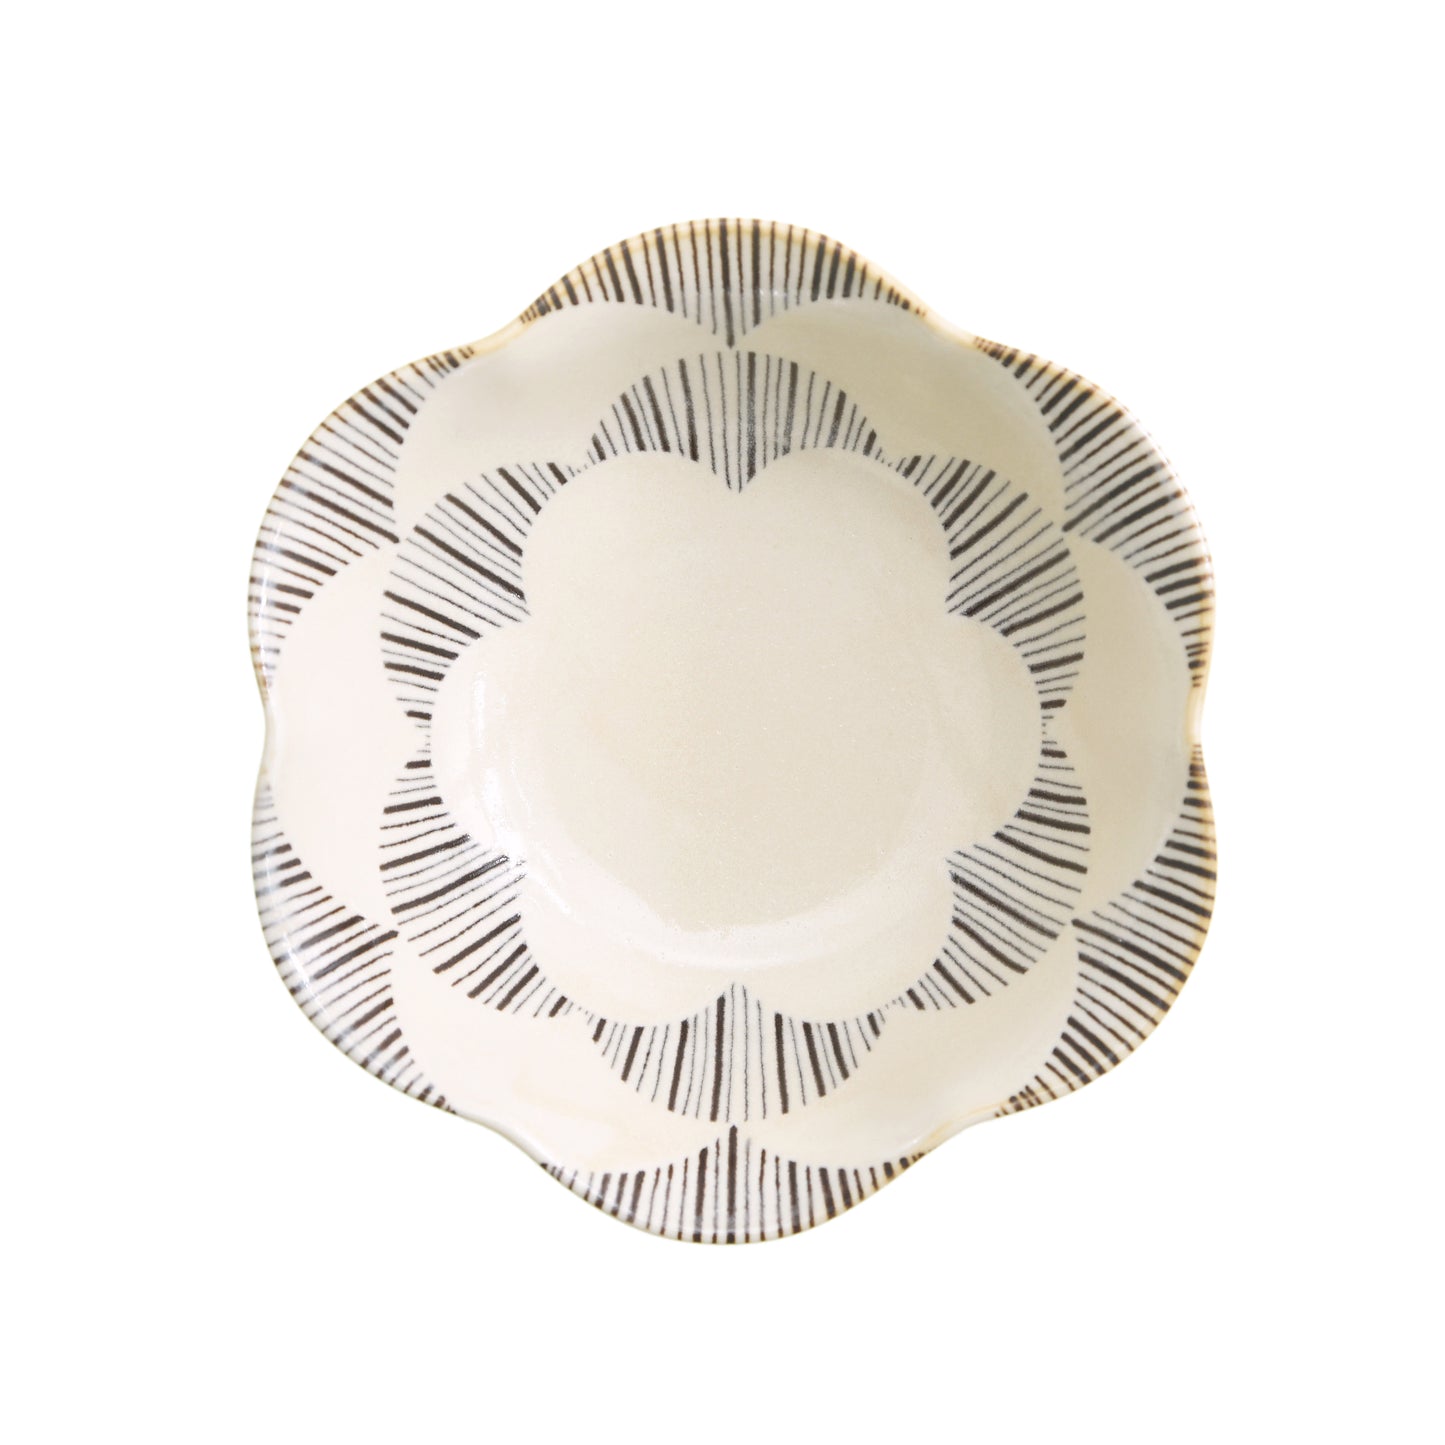 [natural69] [powder glaze] [hexagonal push bowl] Hasami ware bowl plate bowl flower tableware Japanese style fashionable adult Japanese pattern cute